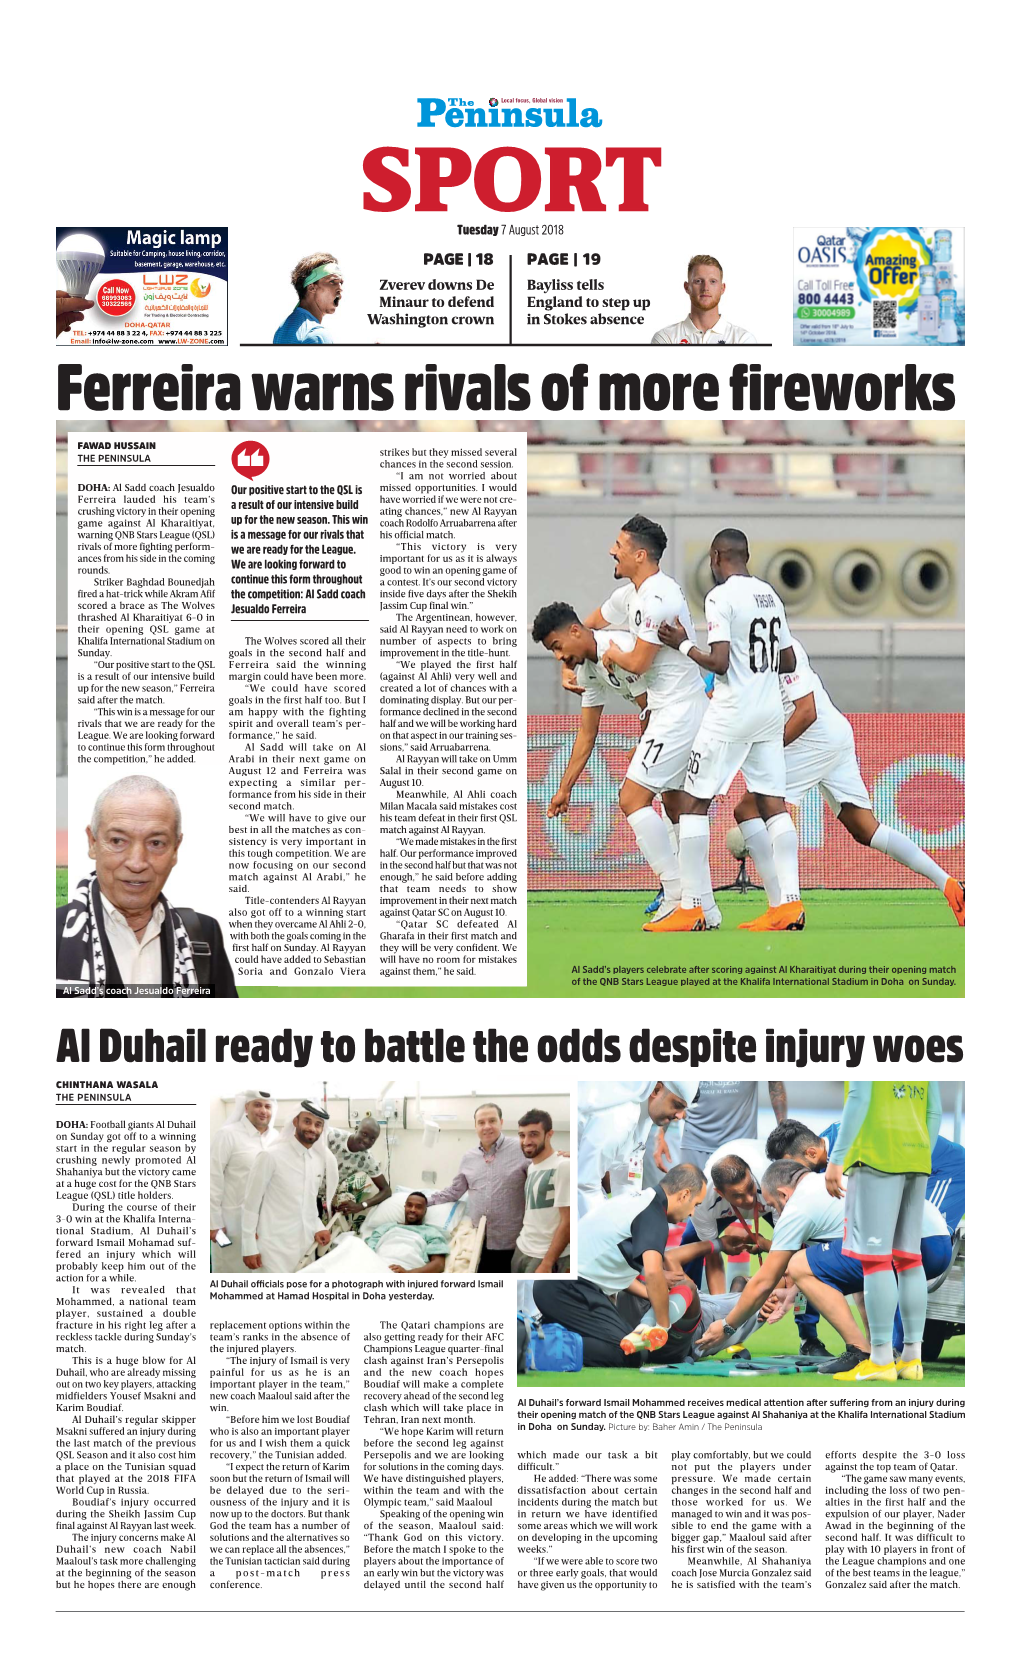 Ferreira Warns Rivals of More Fireworks